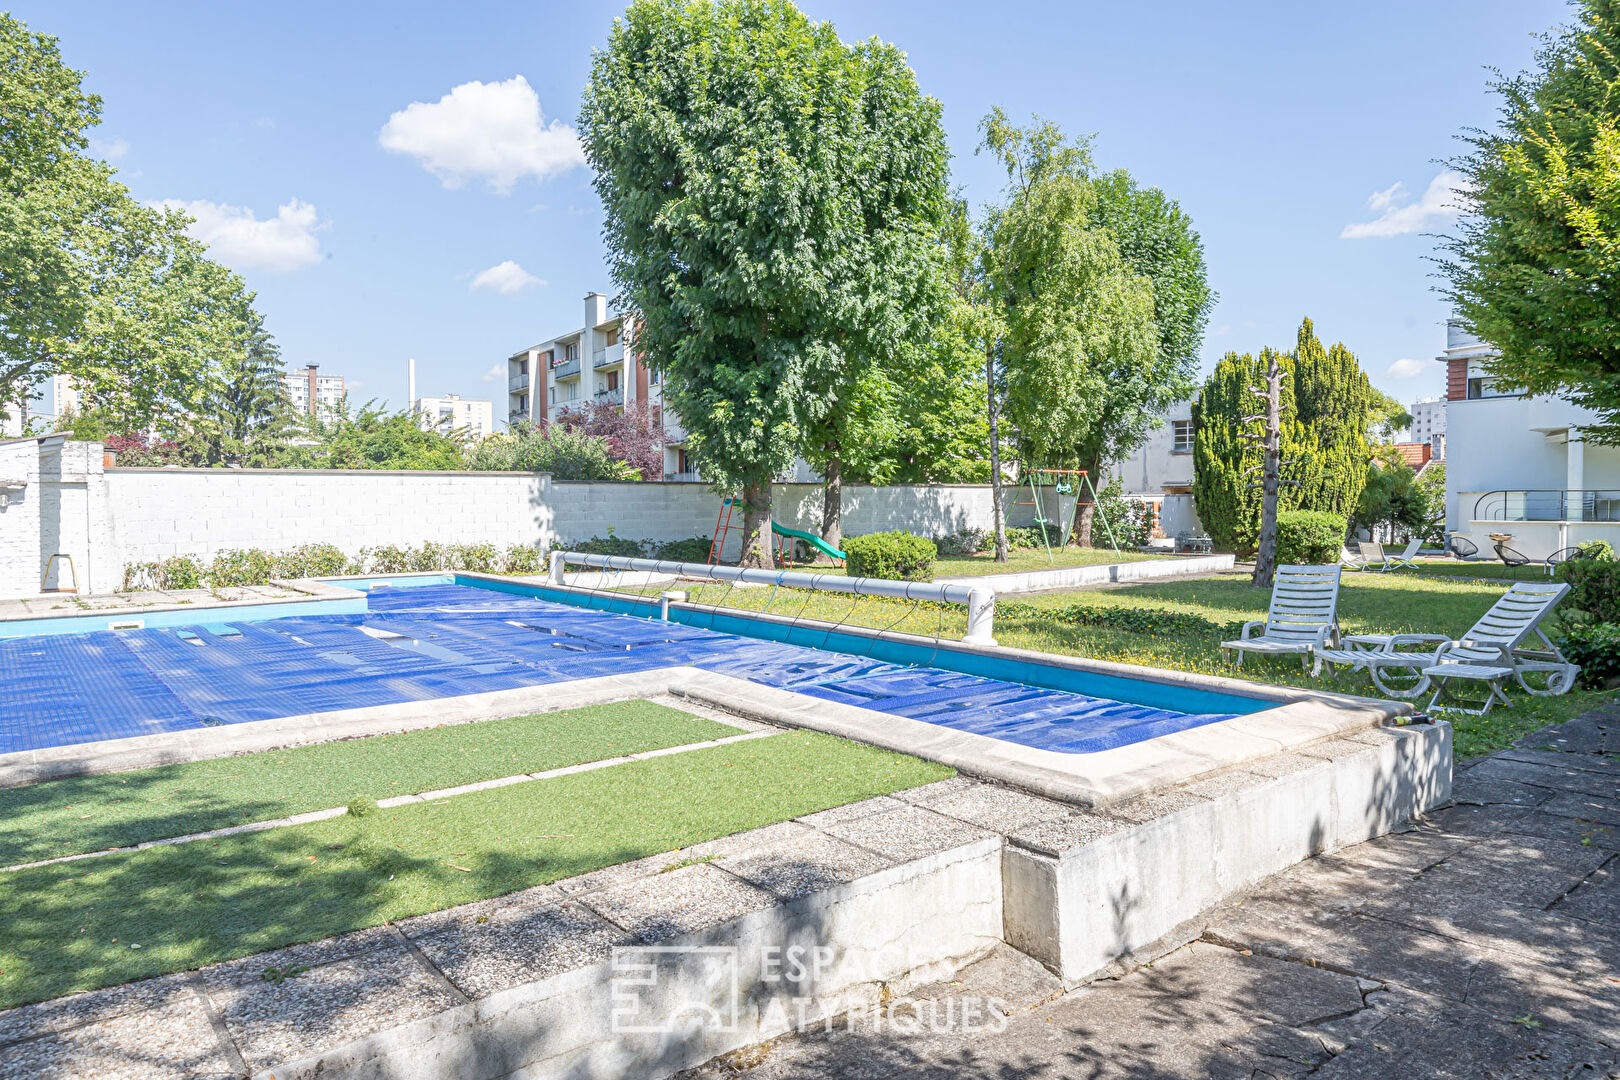 Architect villa with swimming pool